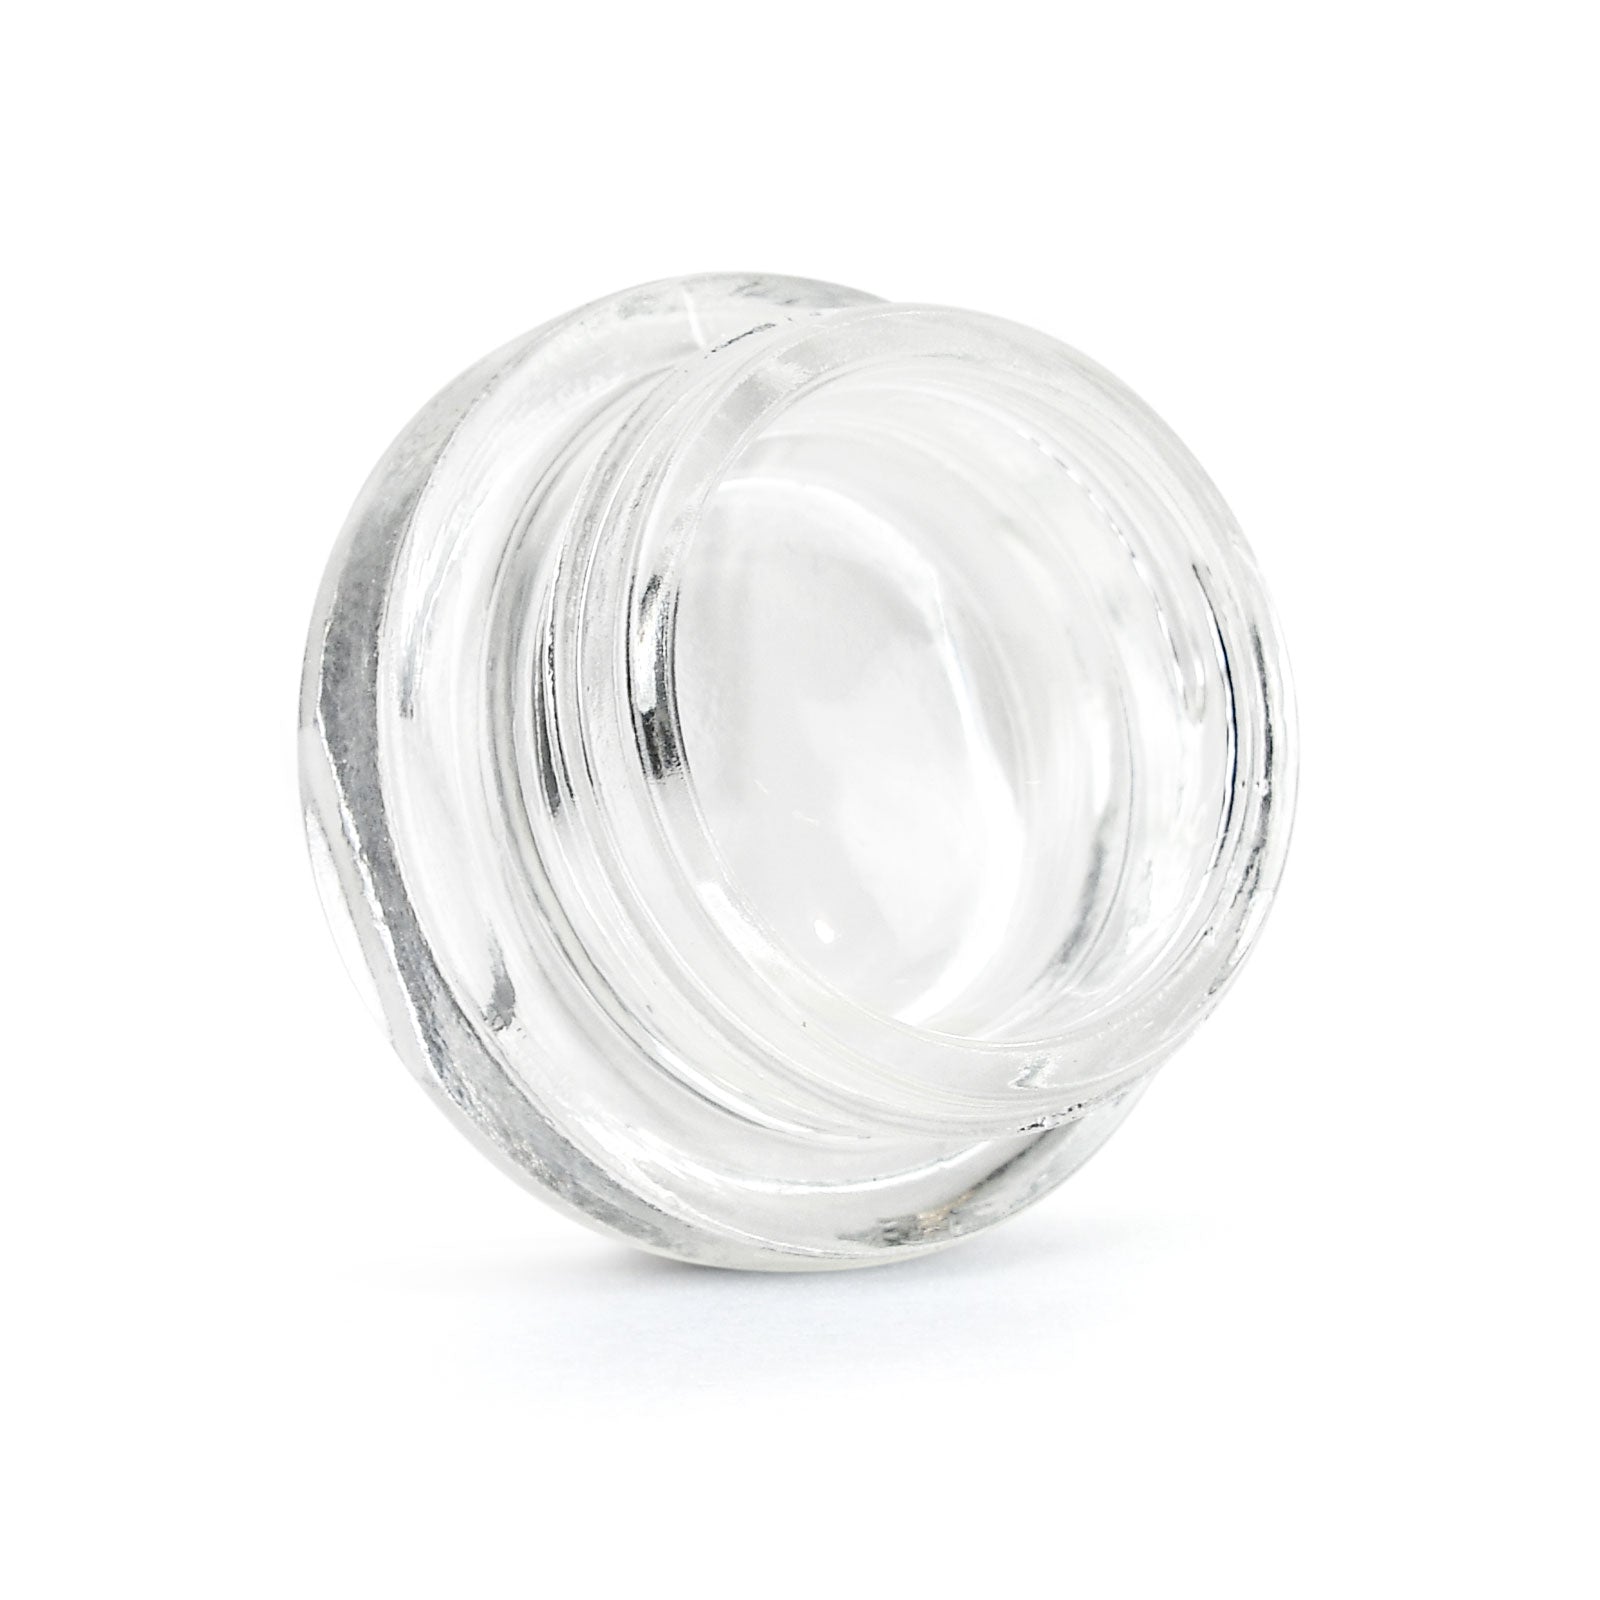 7ml Child Resistant Glass Jar With Black Cap - 1 Gram - 320 Count